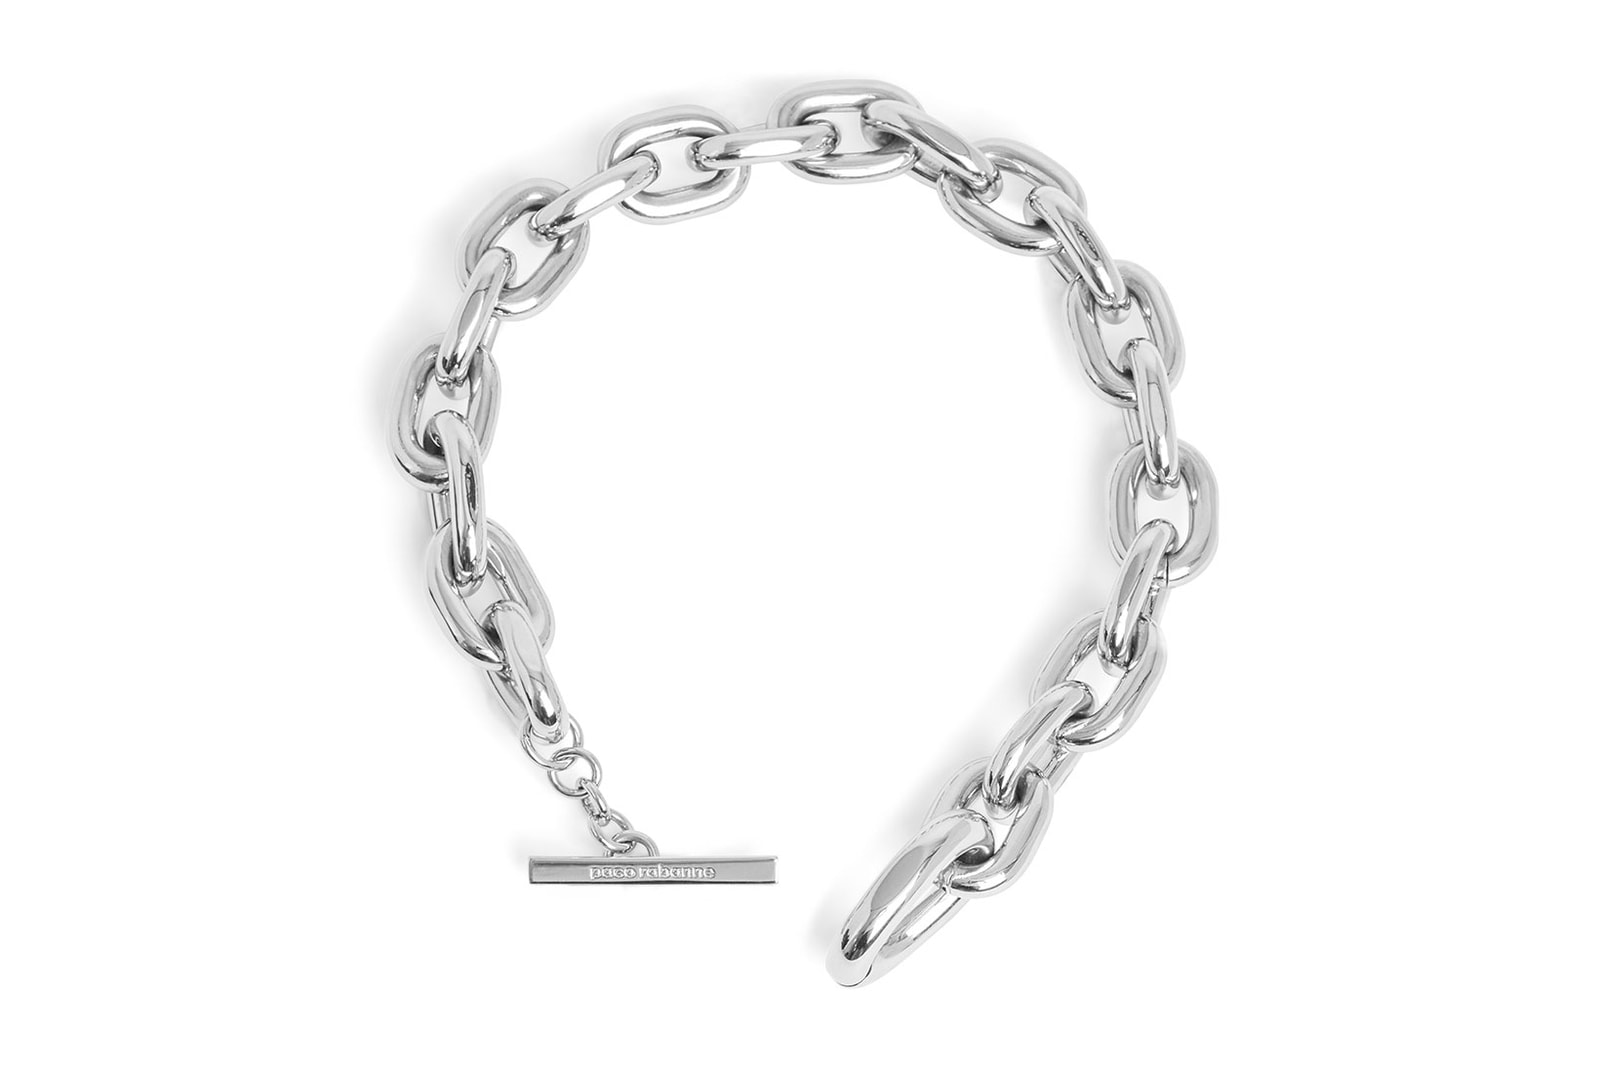 paco rabanne valentine's day build love collection jewelry chain necklace bracelet handbag